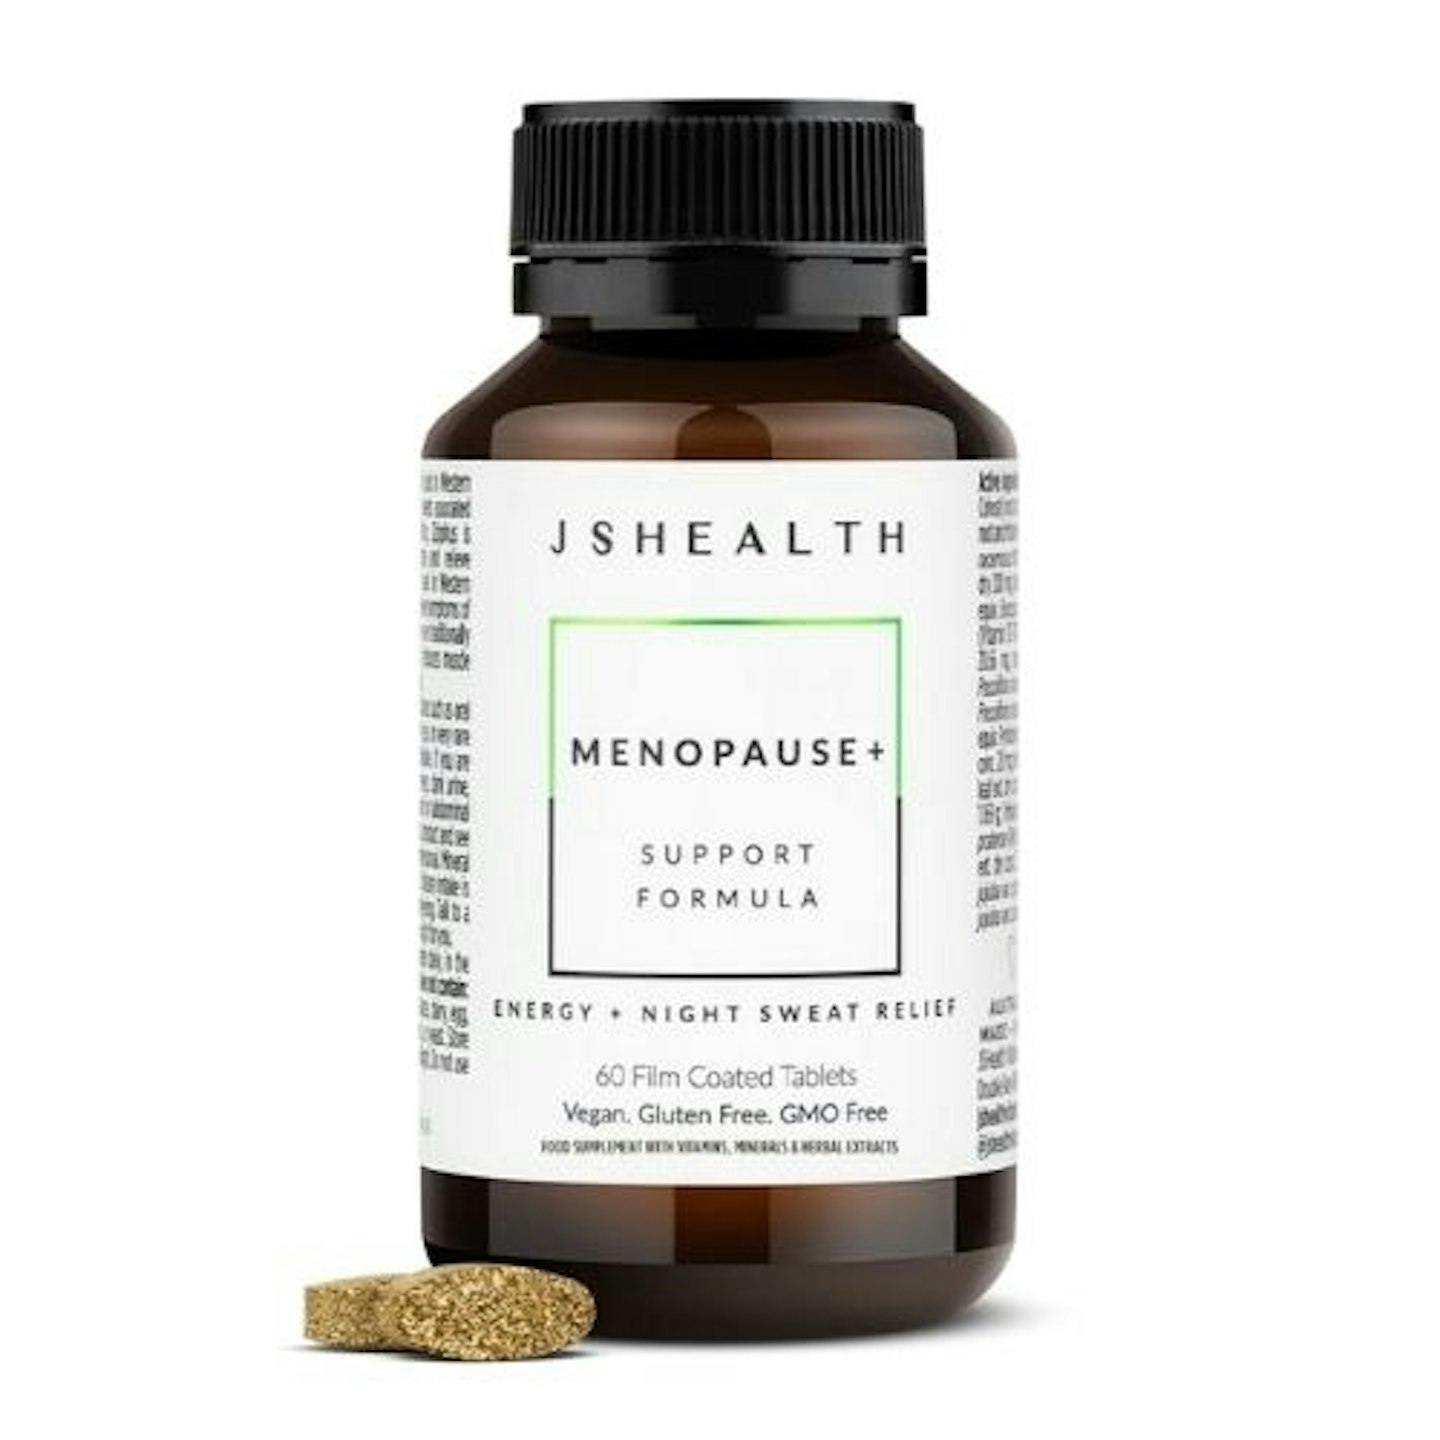 JSHealth Menopause+ Formula, 60 tablets